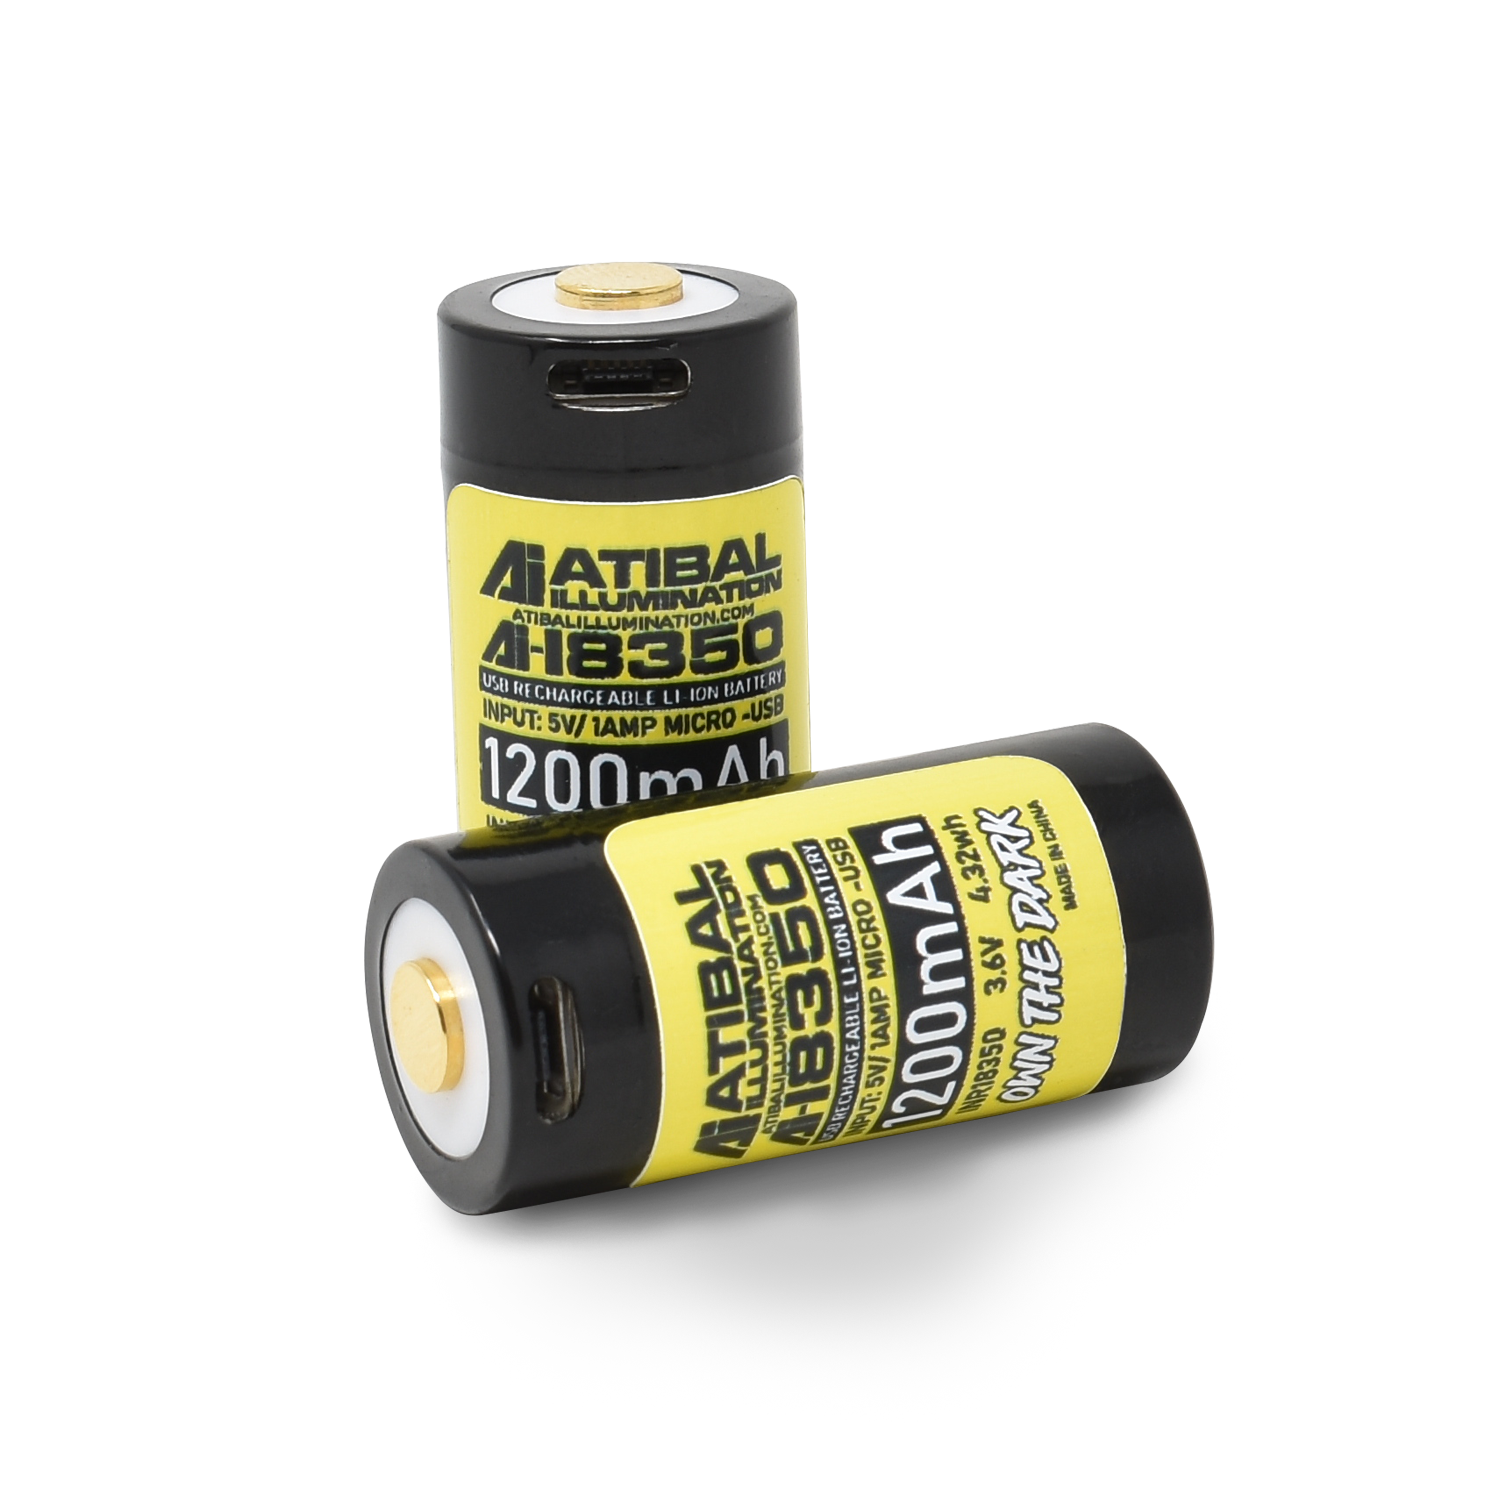 Atibal Illumination 18350 USB Rechargeable Batteries (PAIR)